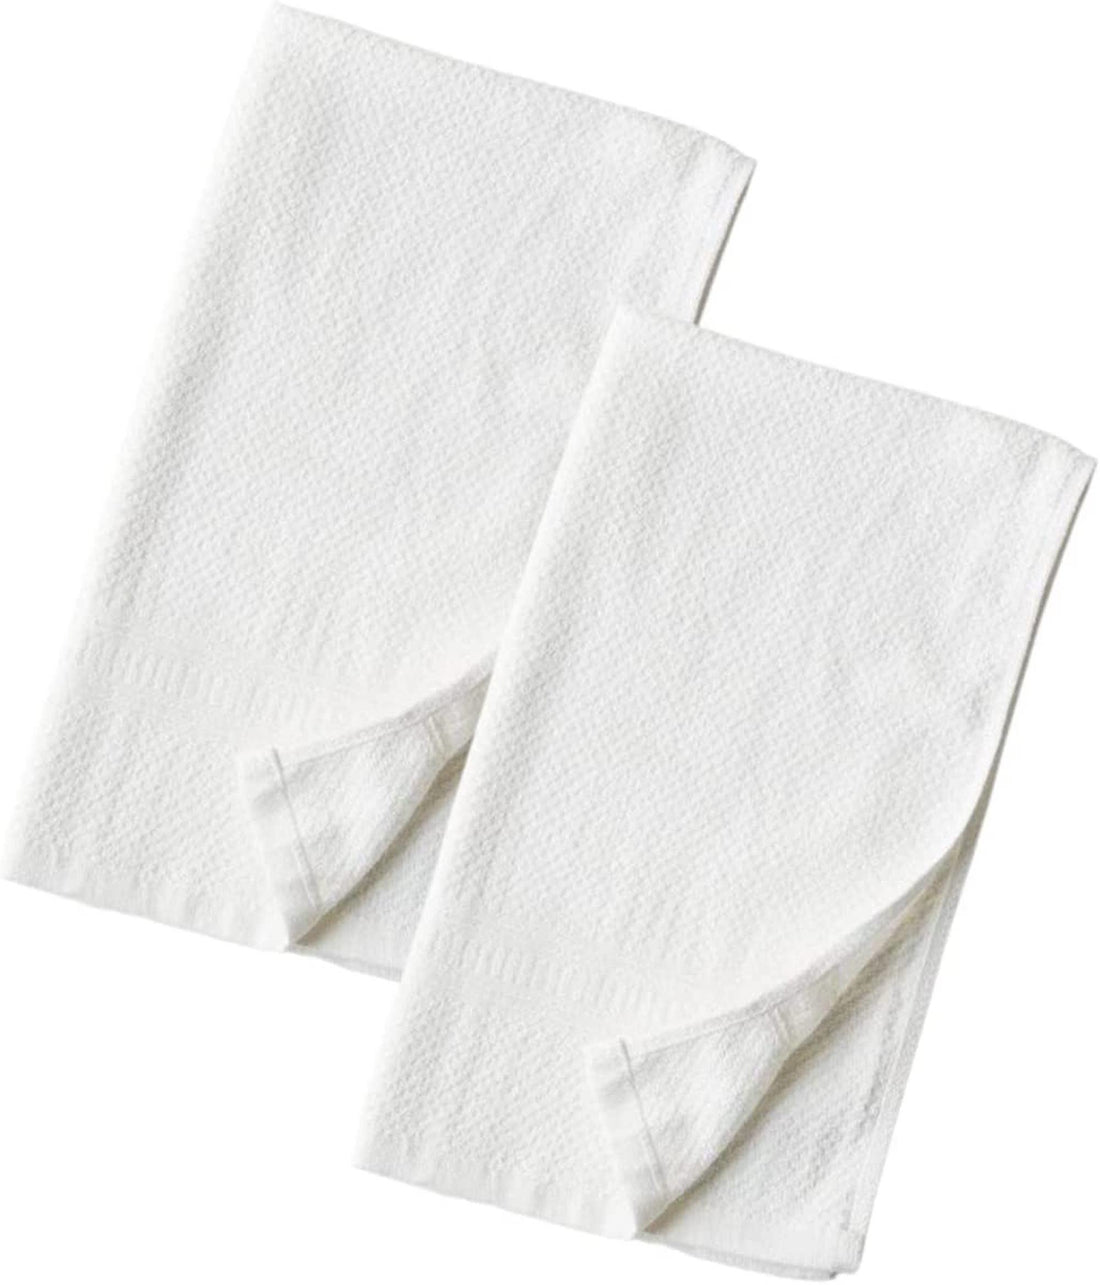 Anact Hemp Organic Bath Towels or Set, 2 Colors, 4 Sizes, 55% Hemp, 45%  Cotton on Food52